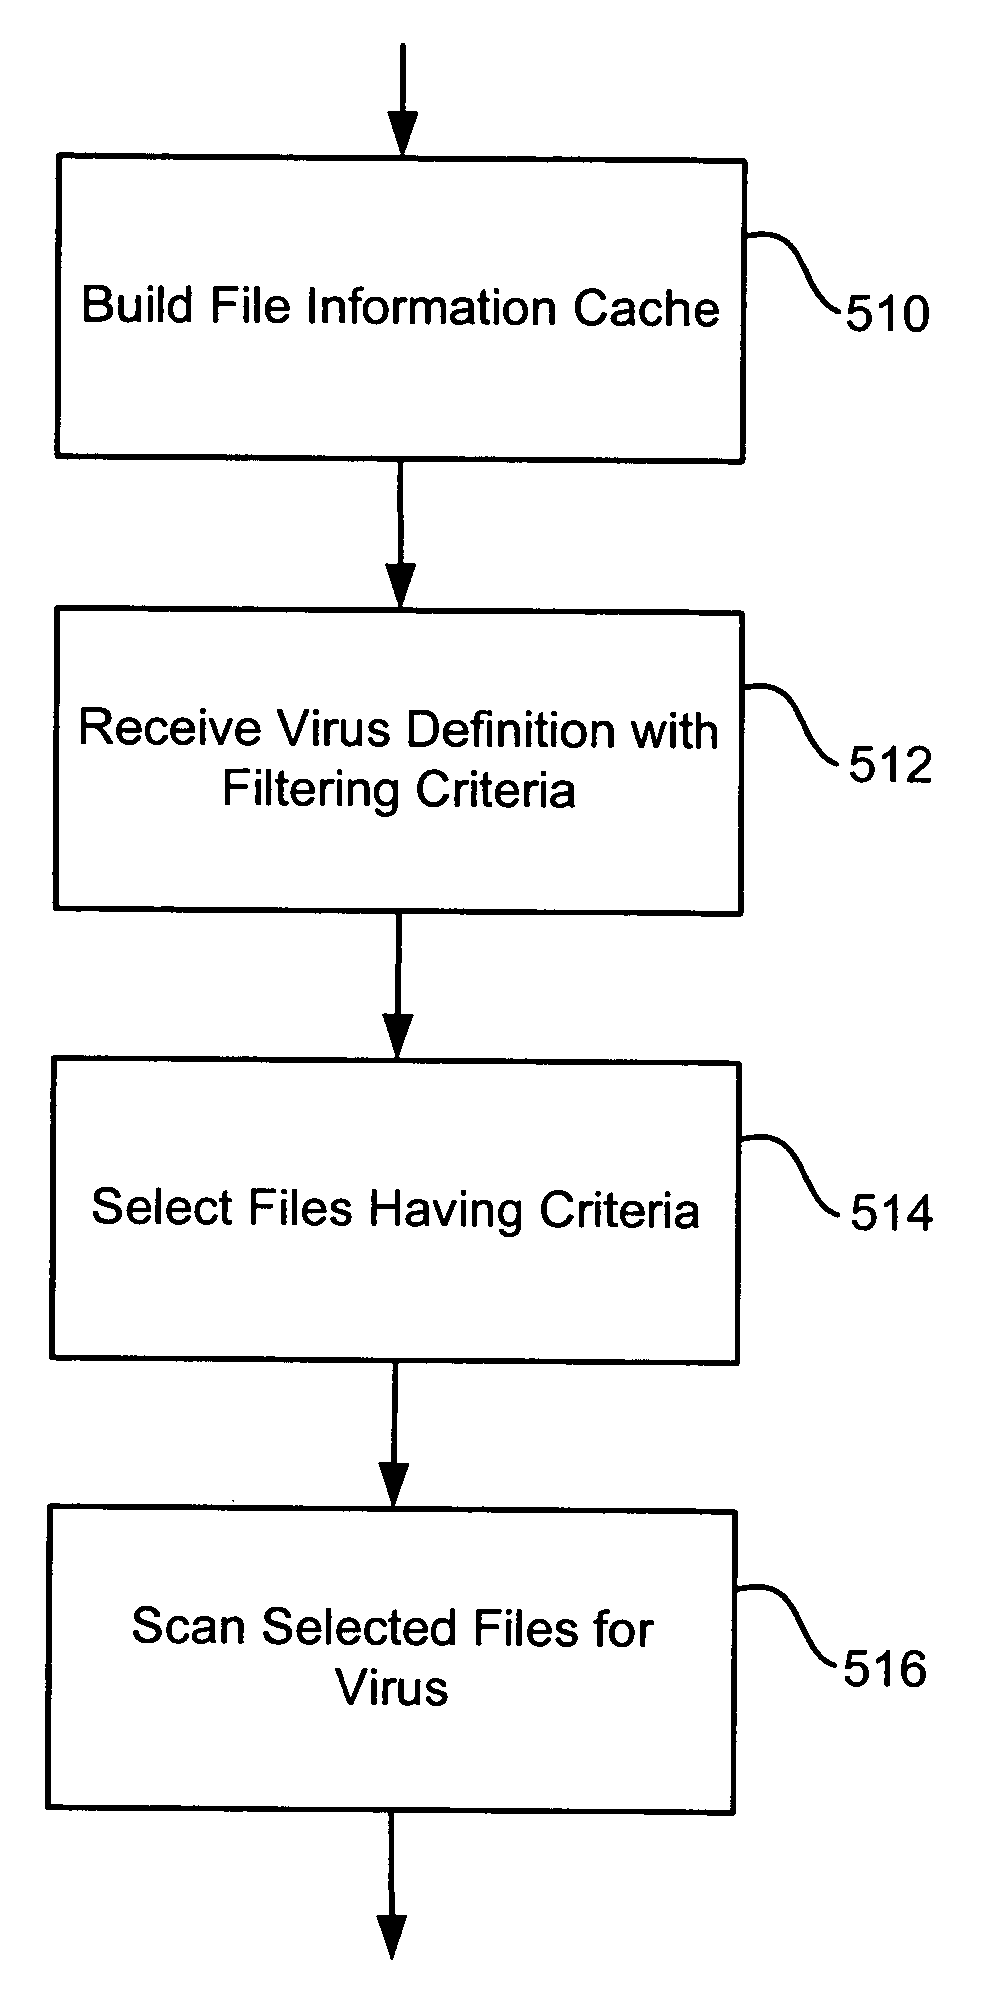 Filtered antivirus scanning